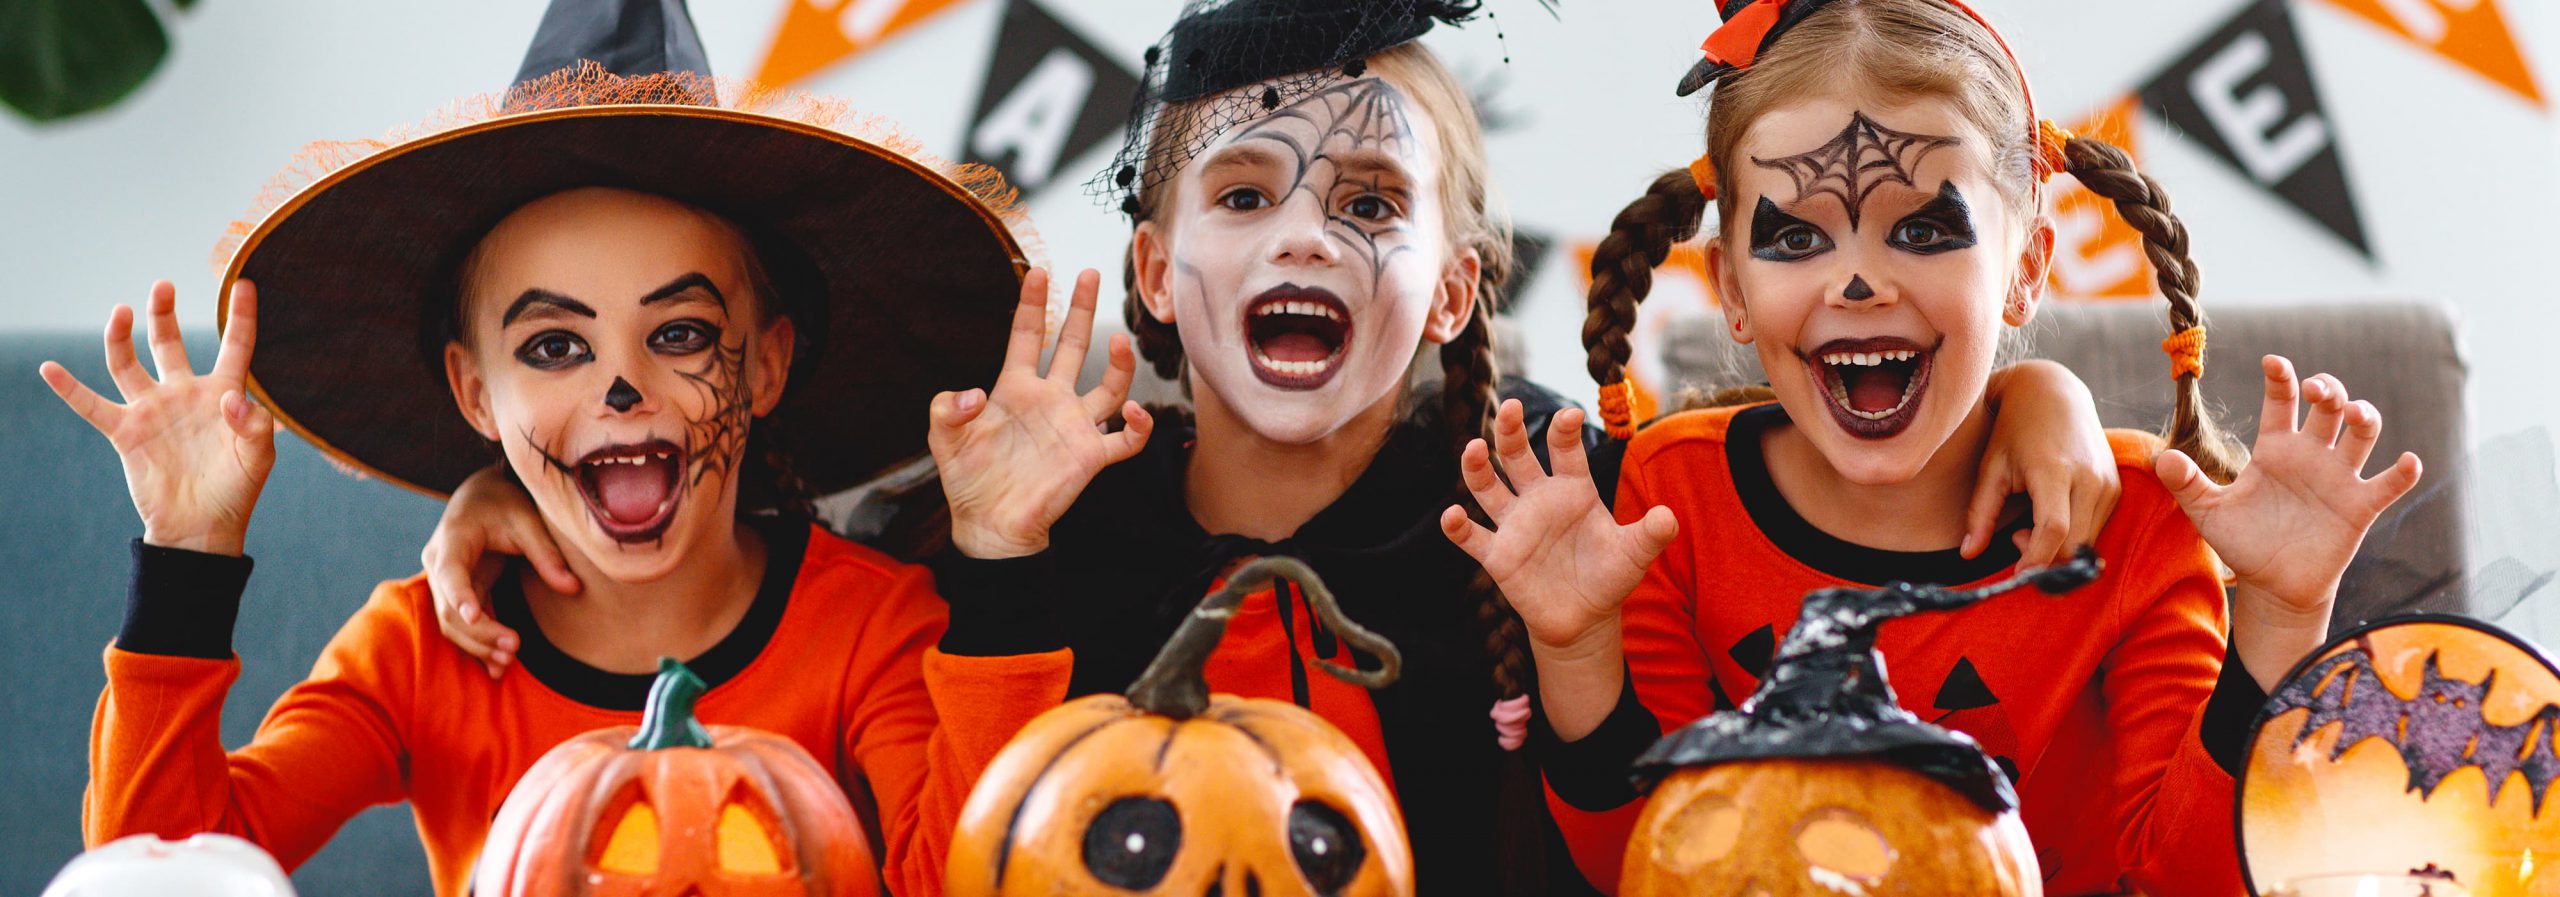 Halloween en familia, un recuerdo inolvidable | Blog Hofmann